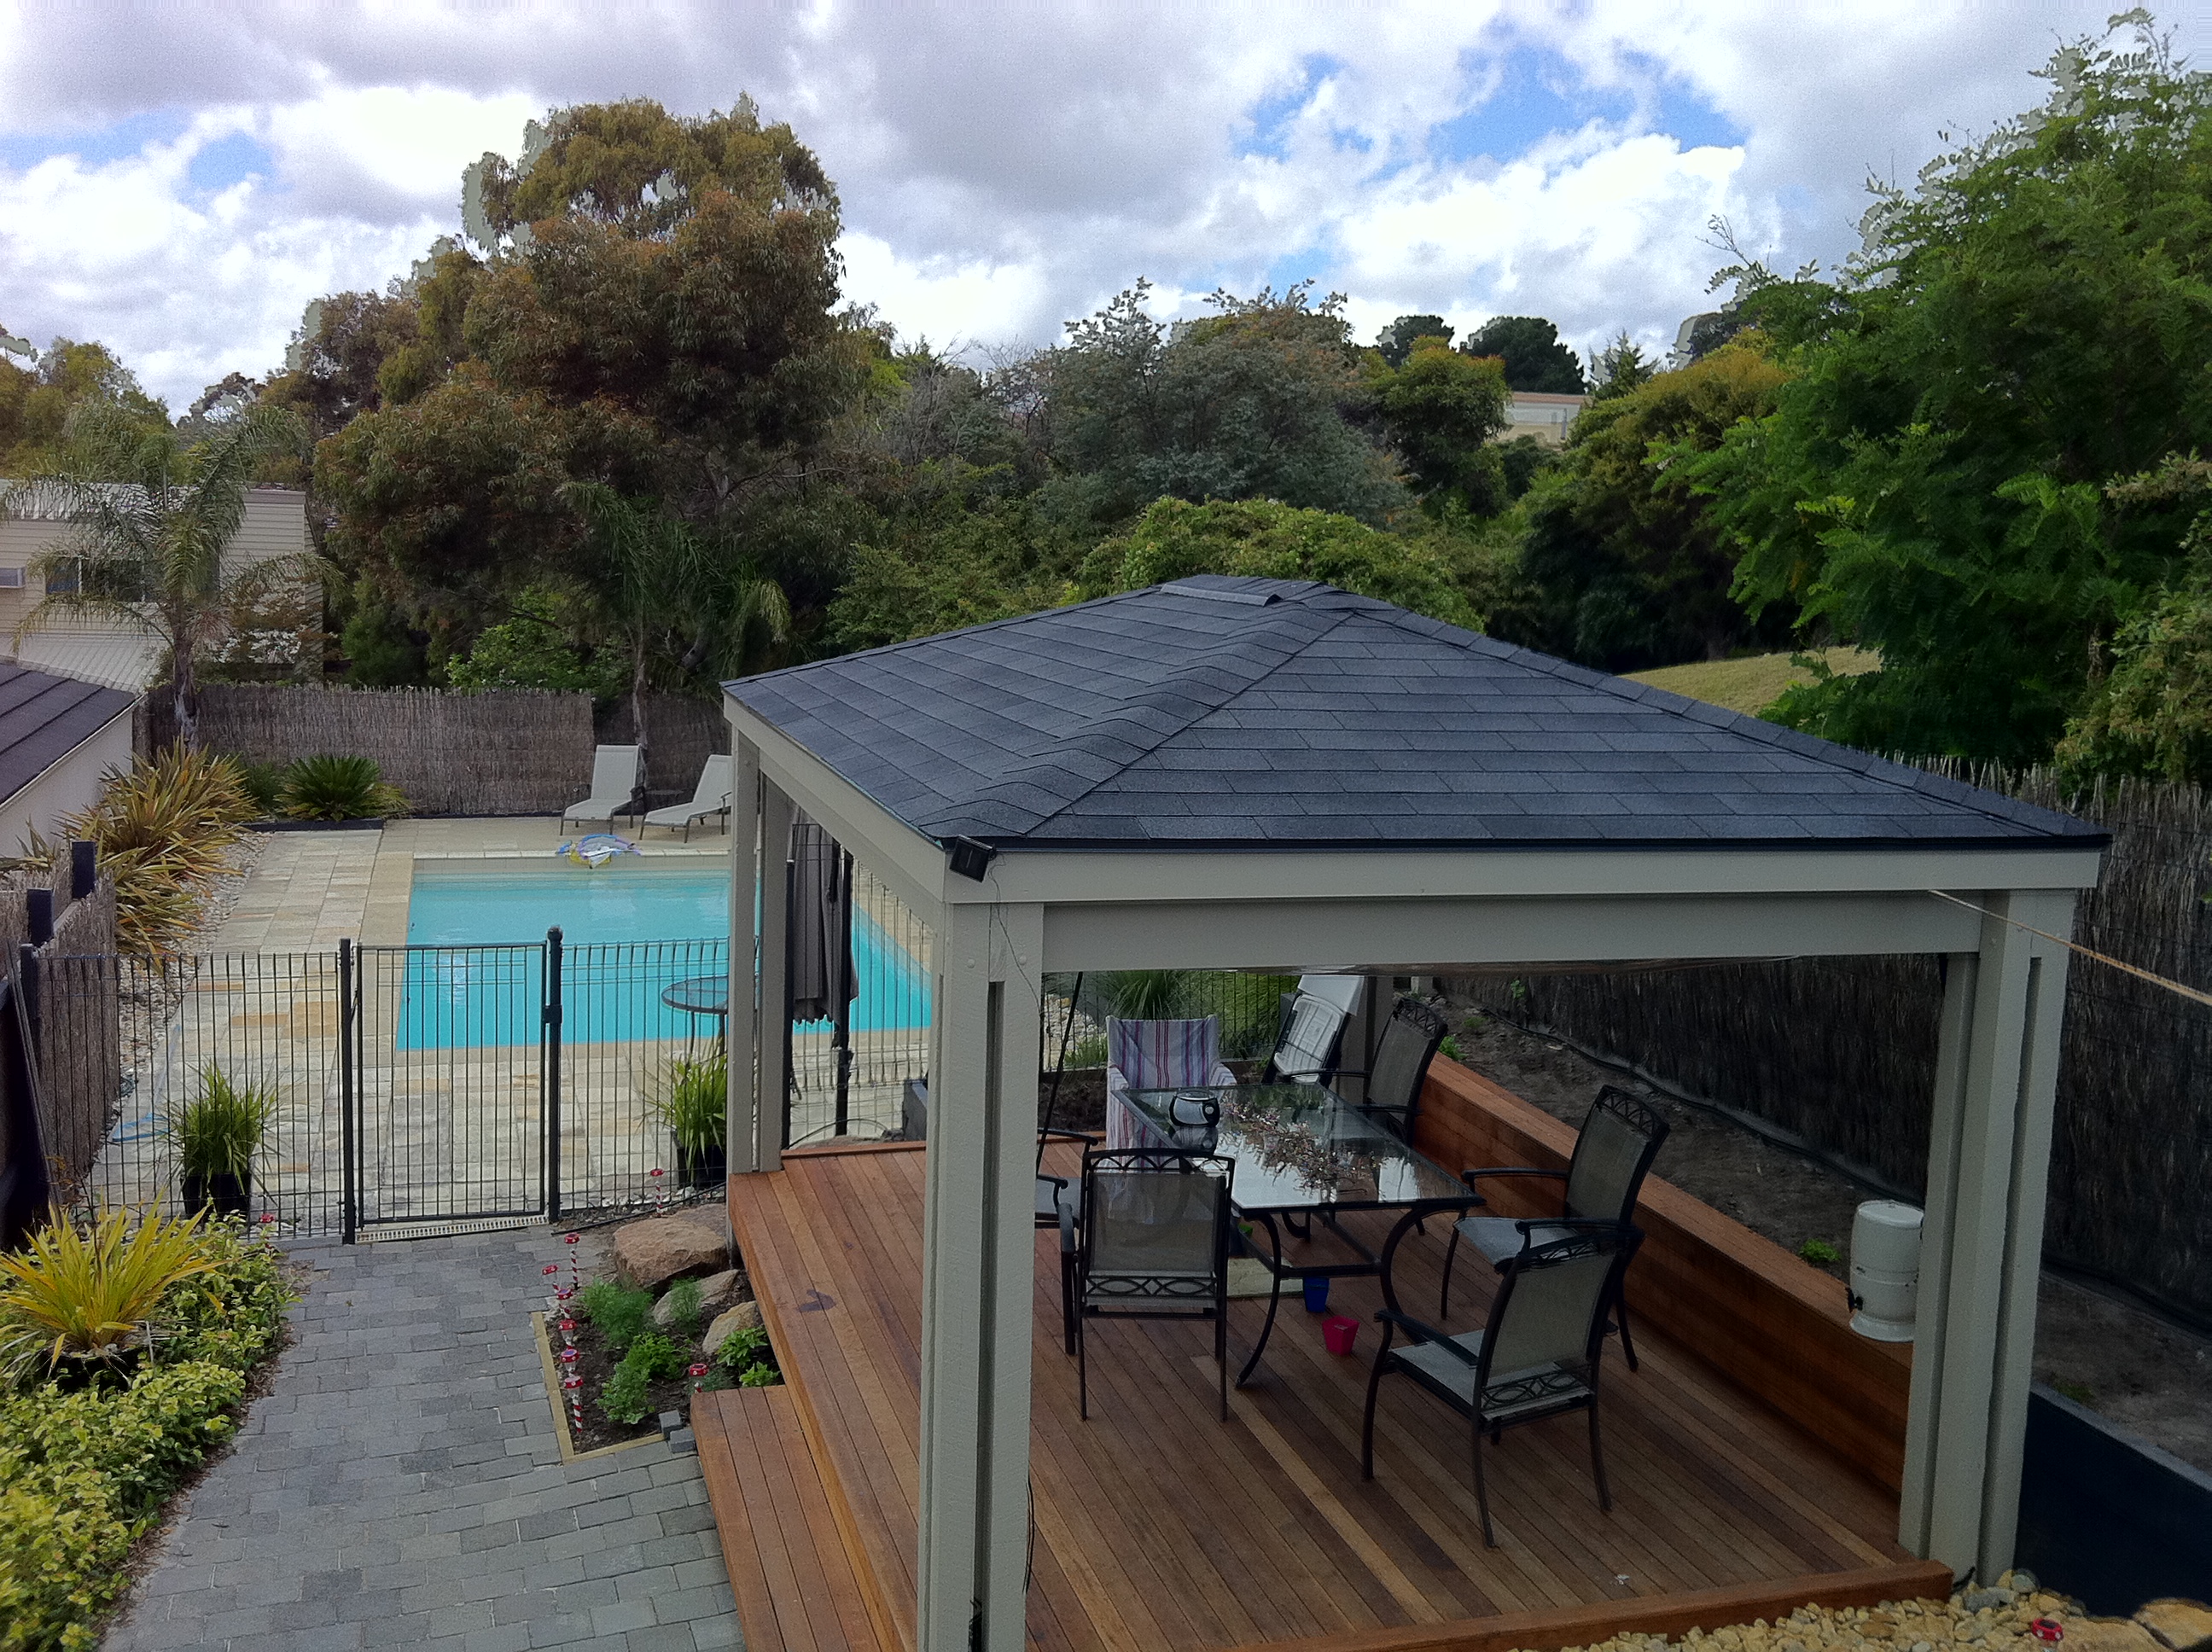 DIY Roofing Supplies | Asphalt Shingles for Homes, Gazebos ...